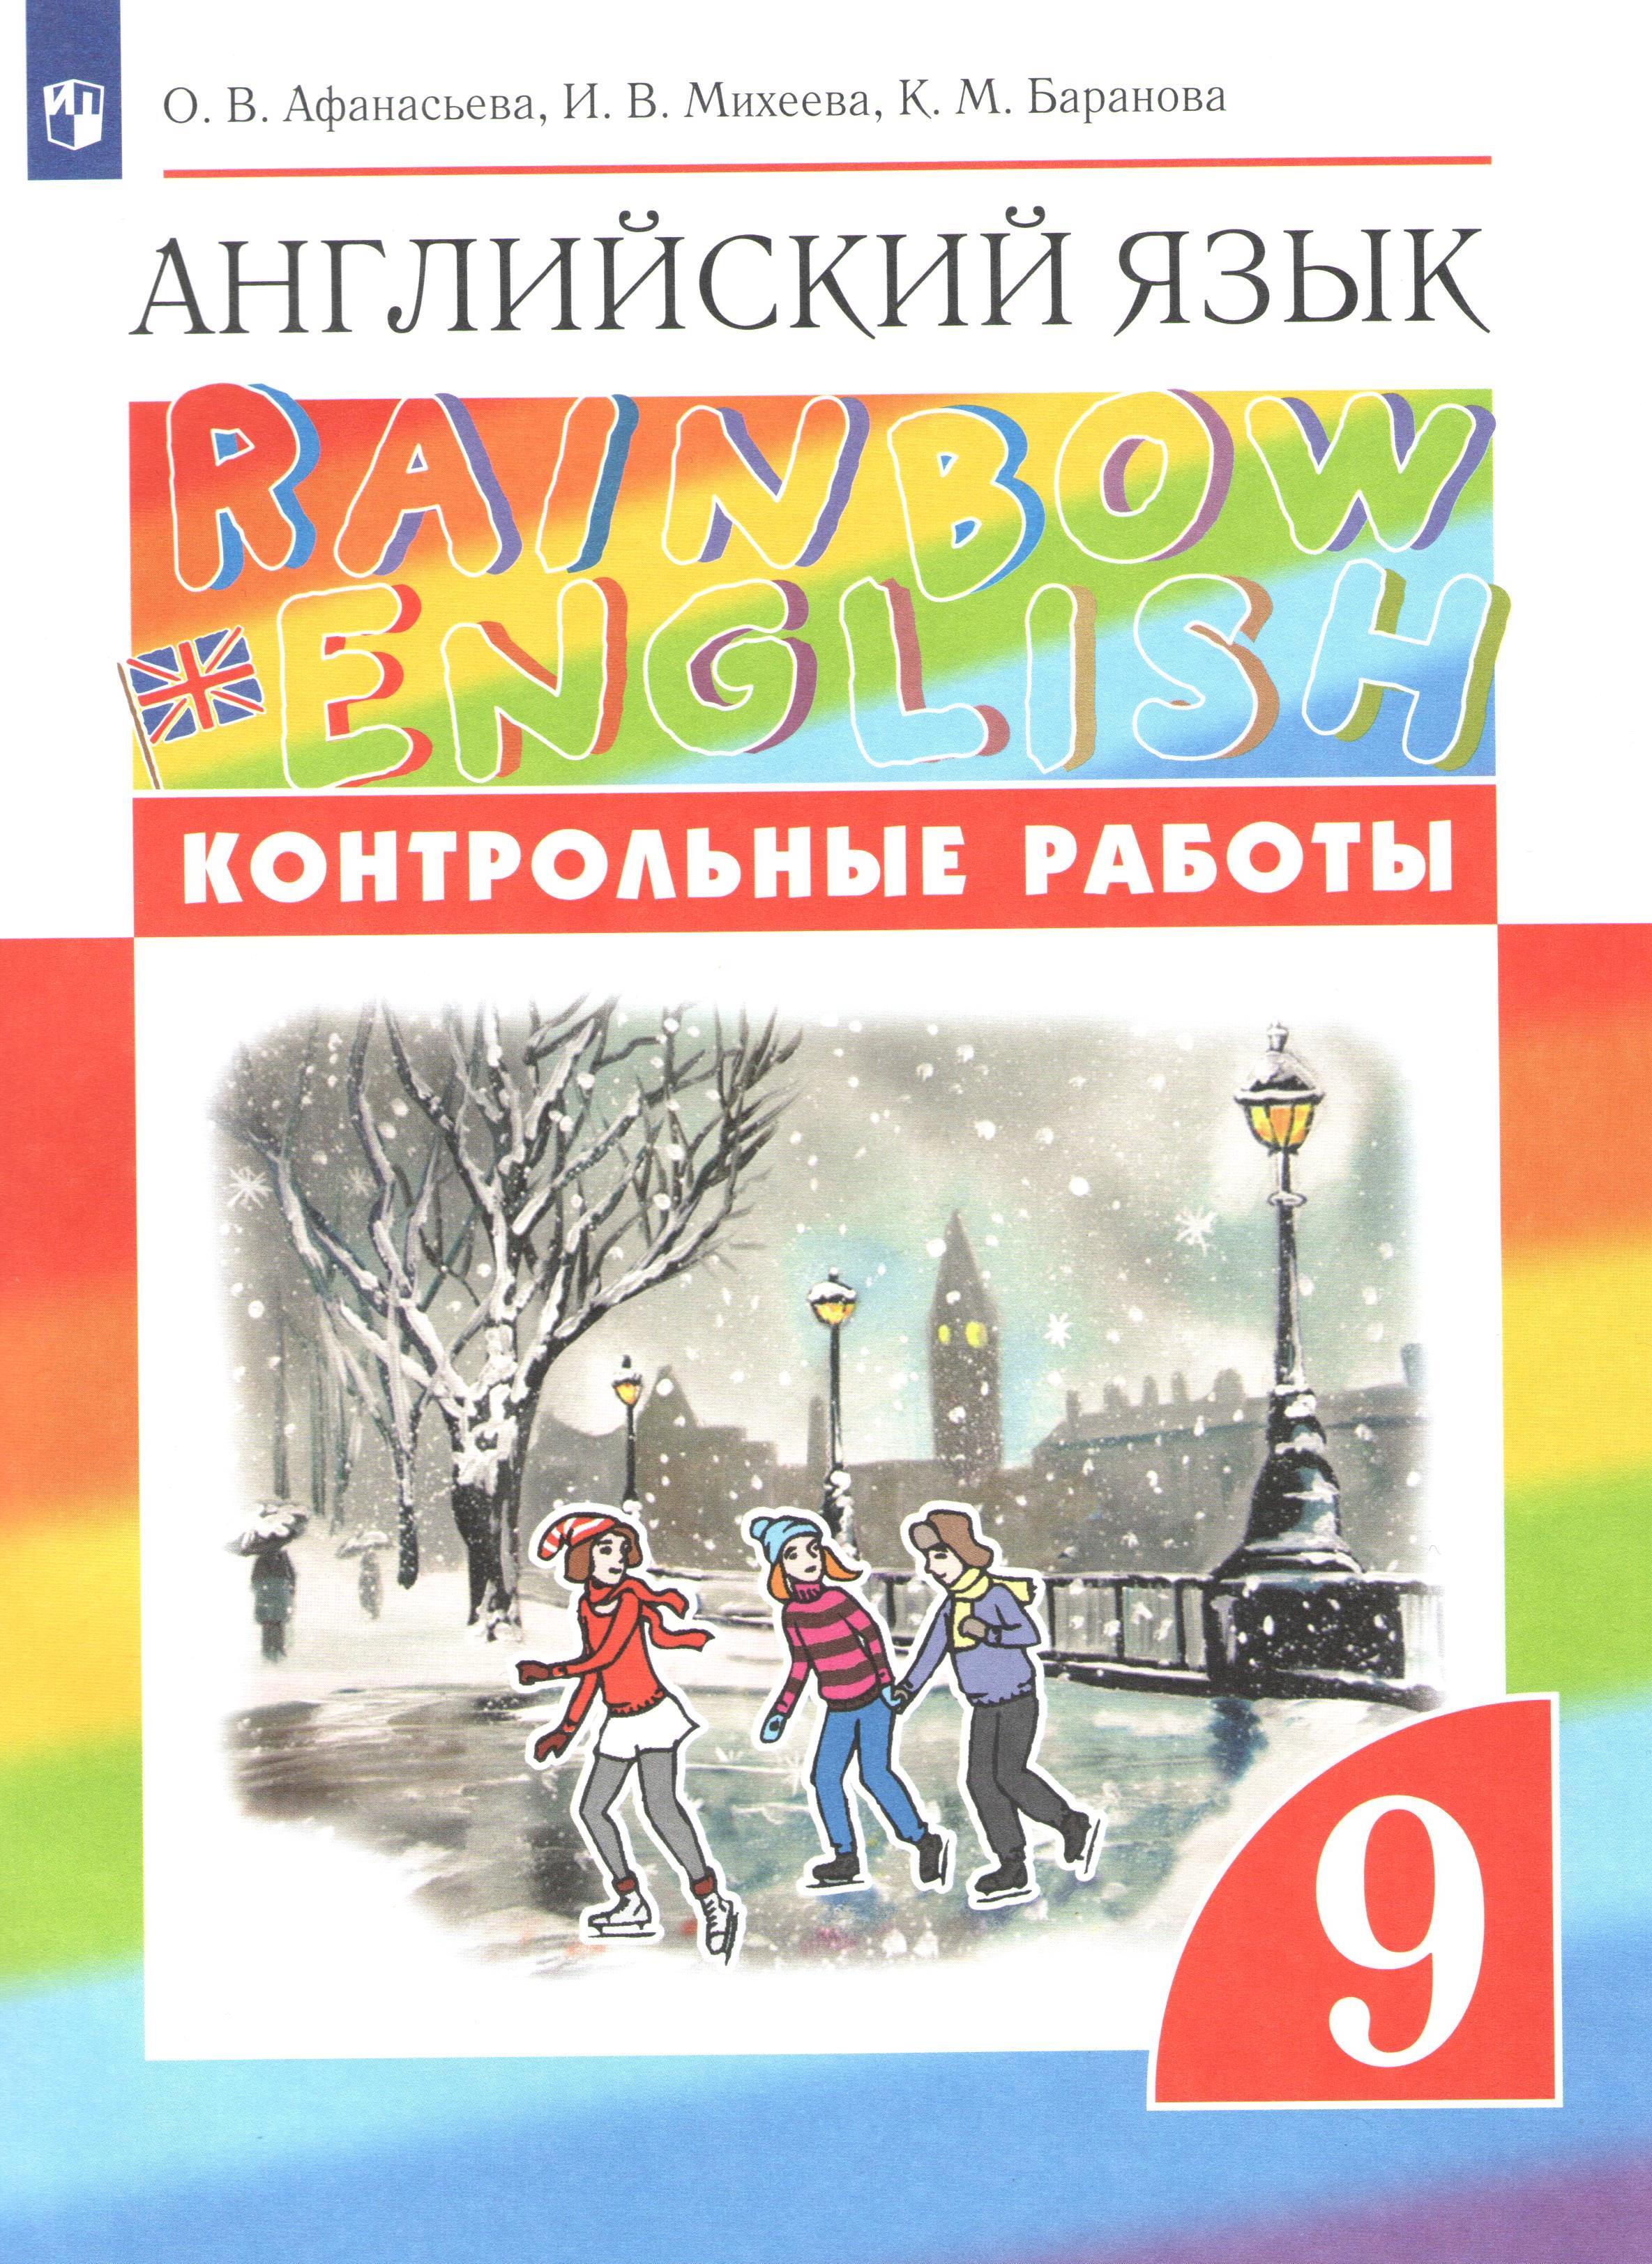 Баранова английский аудио. Английский язык Баранова. Книга Rainbow English отзывы. К М Баранова английский язык 5 класс. Английский язык Раинбов 9 класс ex5 р49.